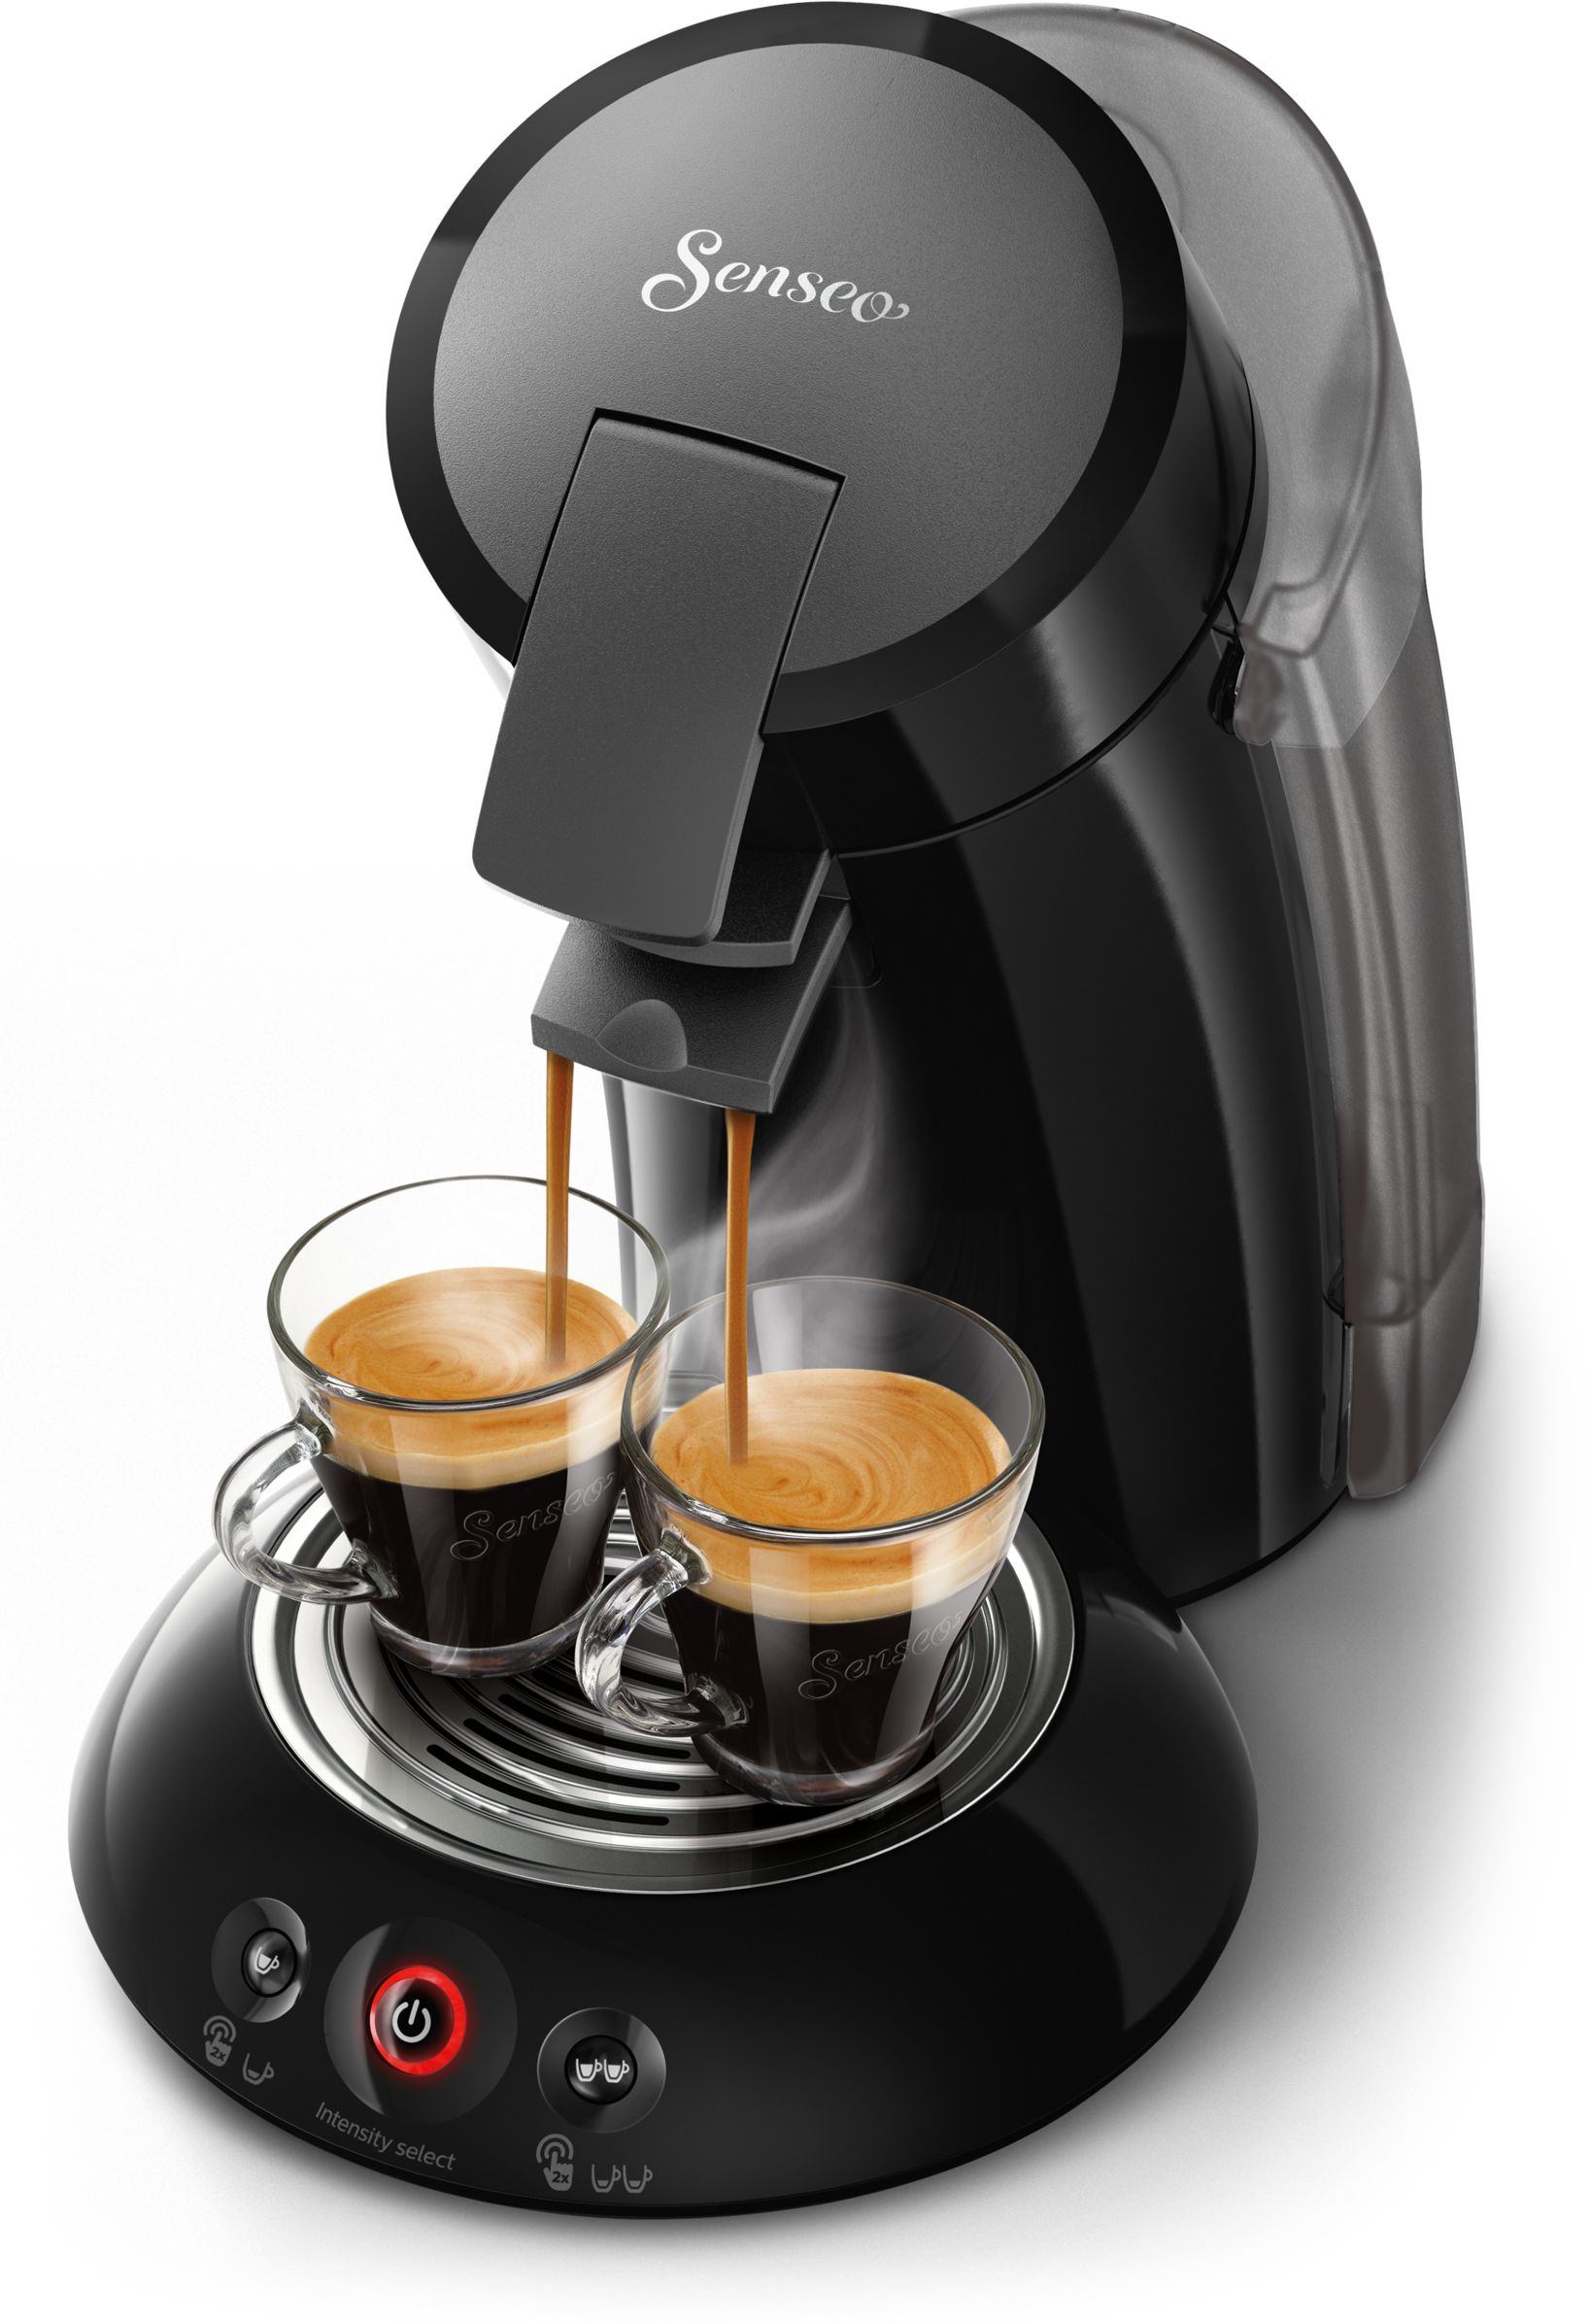 Philips Senseo Coffee Maker  Coffee online, Coffee maker, Organic recipes